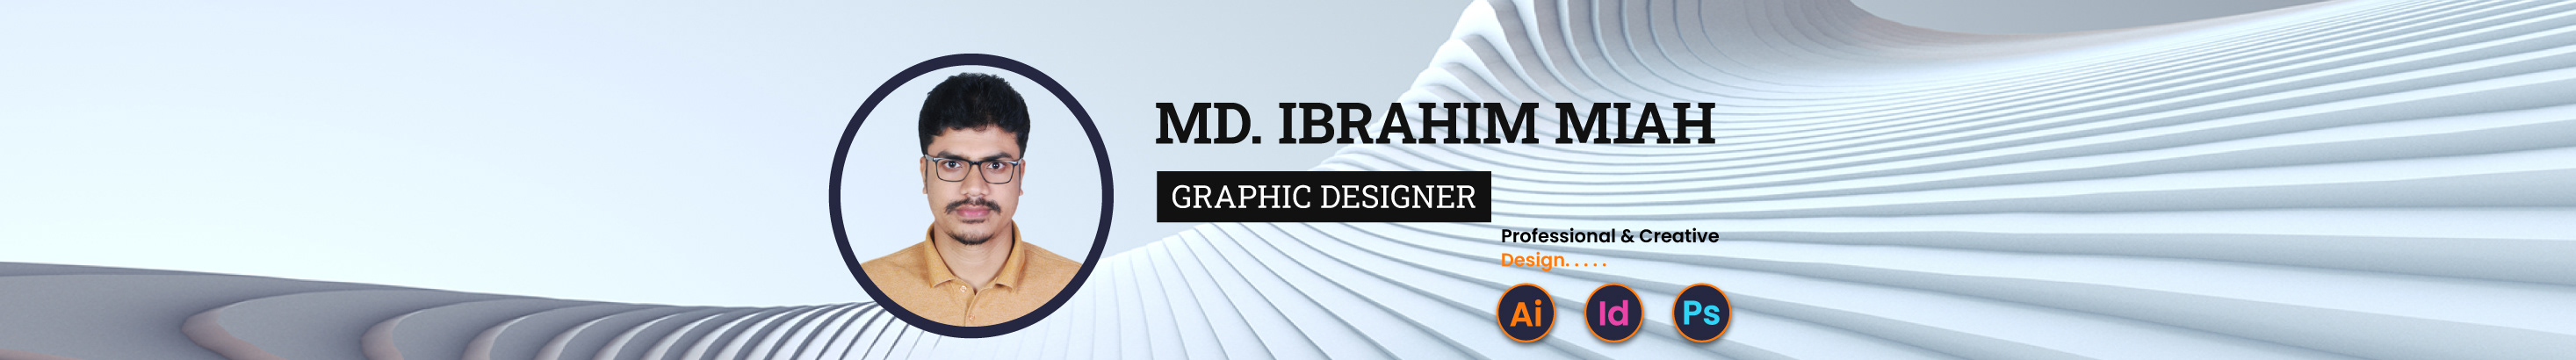 MD. IBRAHIM MIAH's profile banner